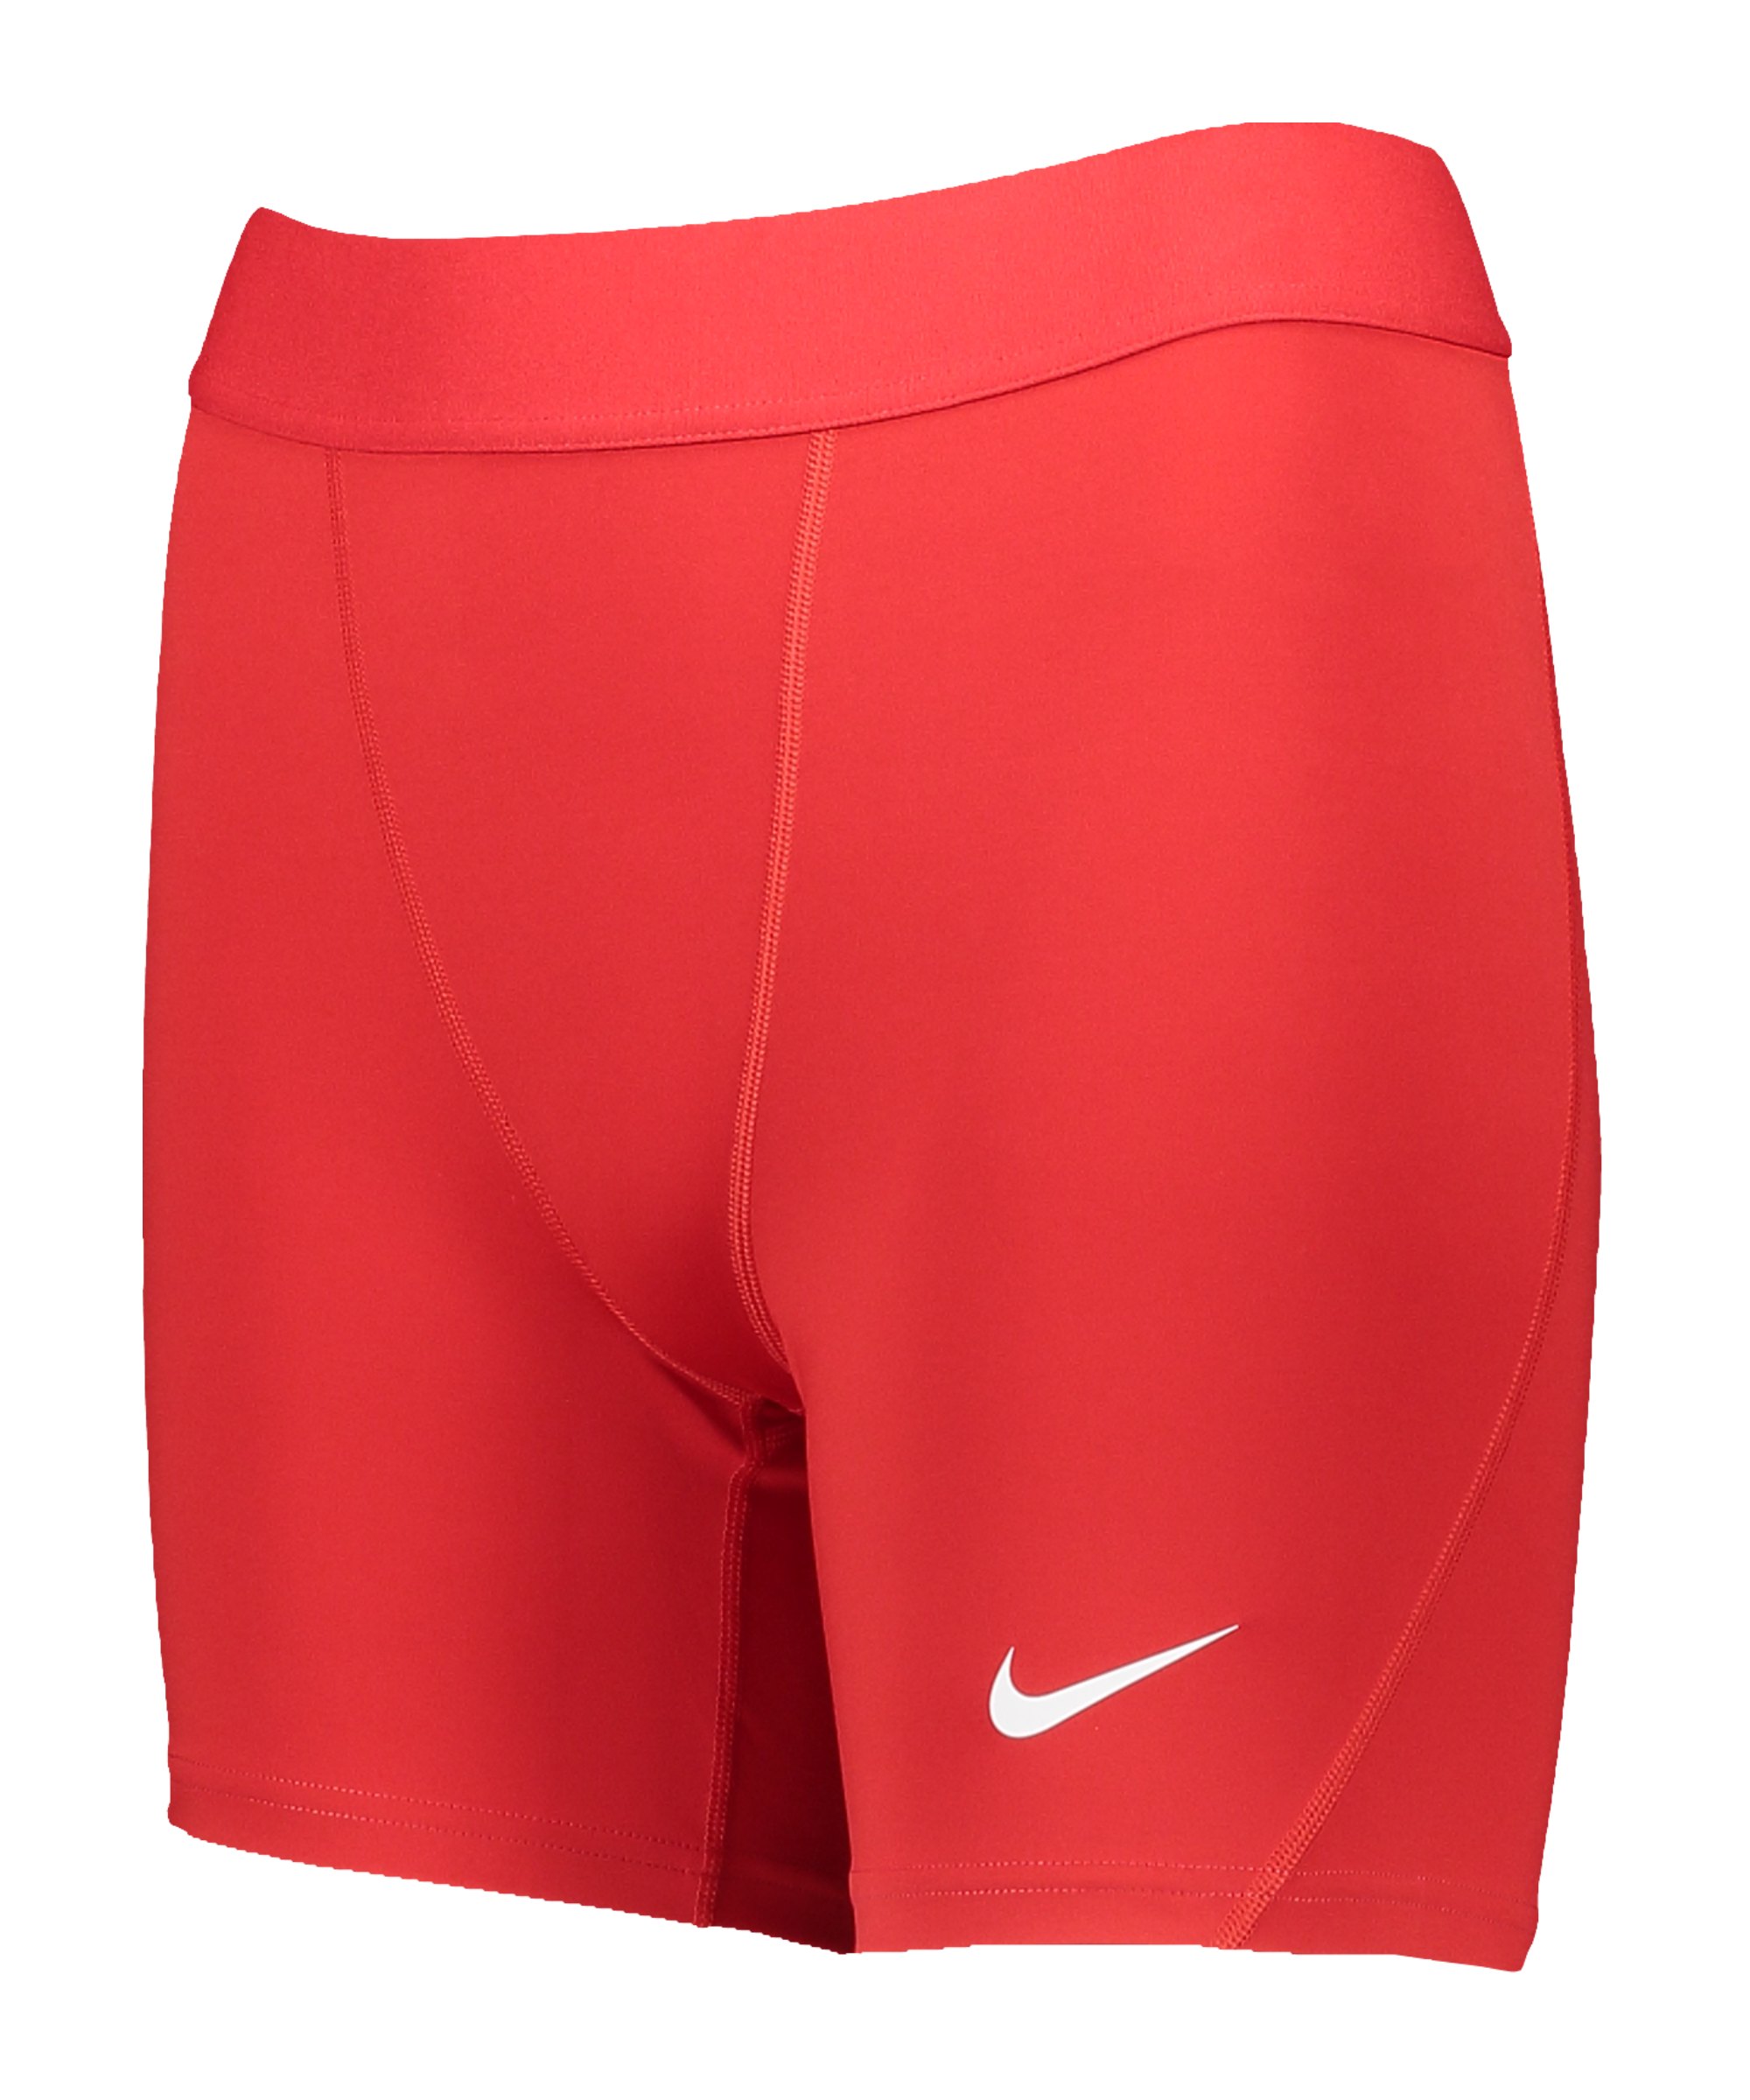 Nike Pro Strike Short Damen Rot Weiss F657 - rot